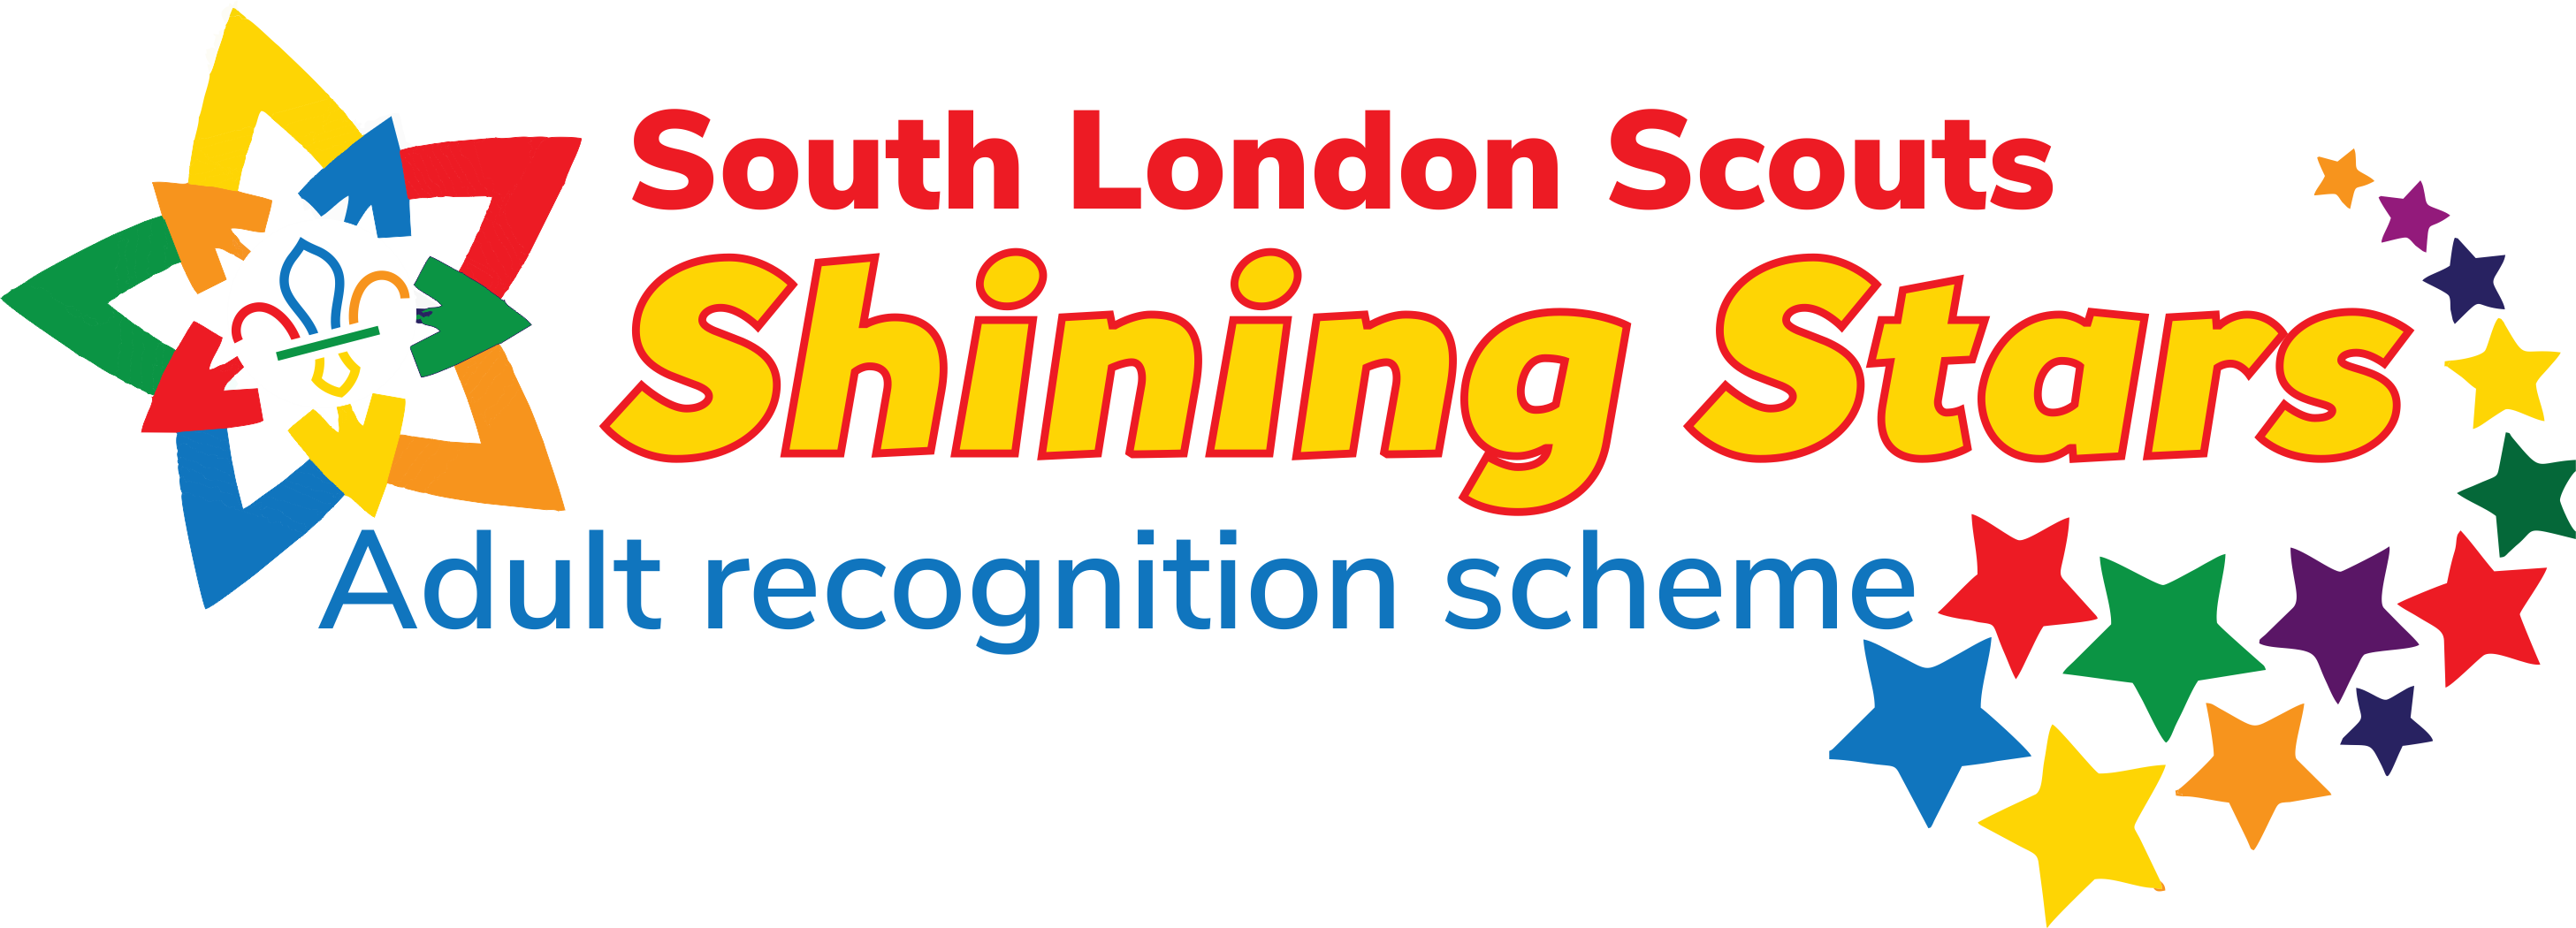 South London Scouts Shining Stars